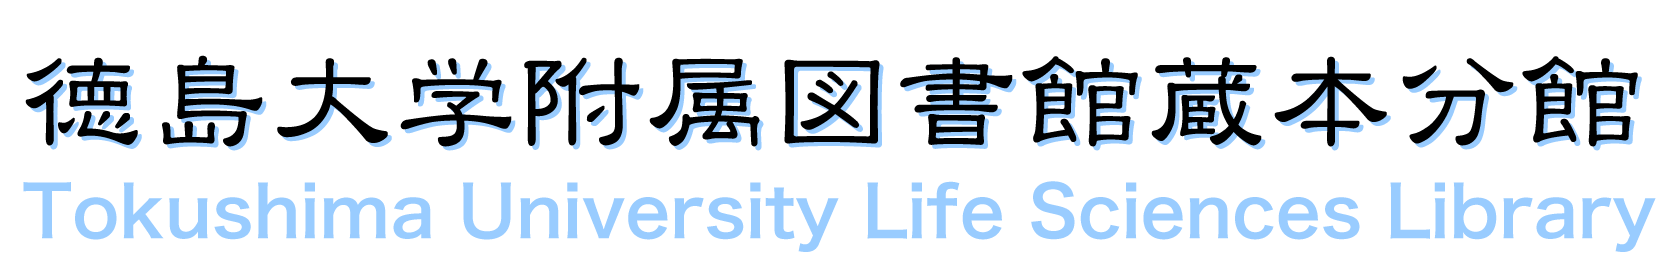 Life Science Library,The University of Tokushima